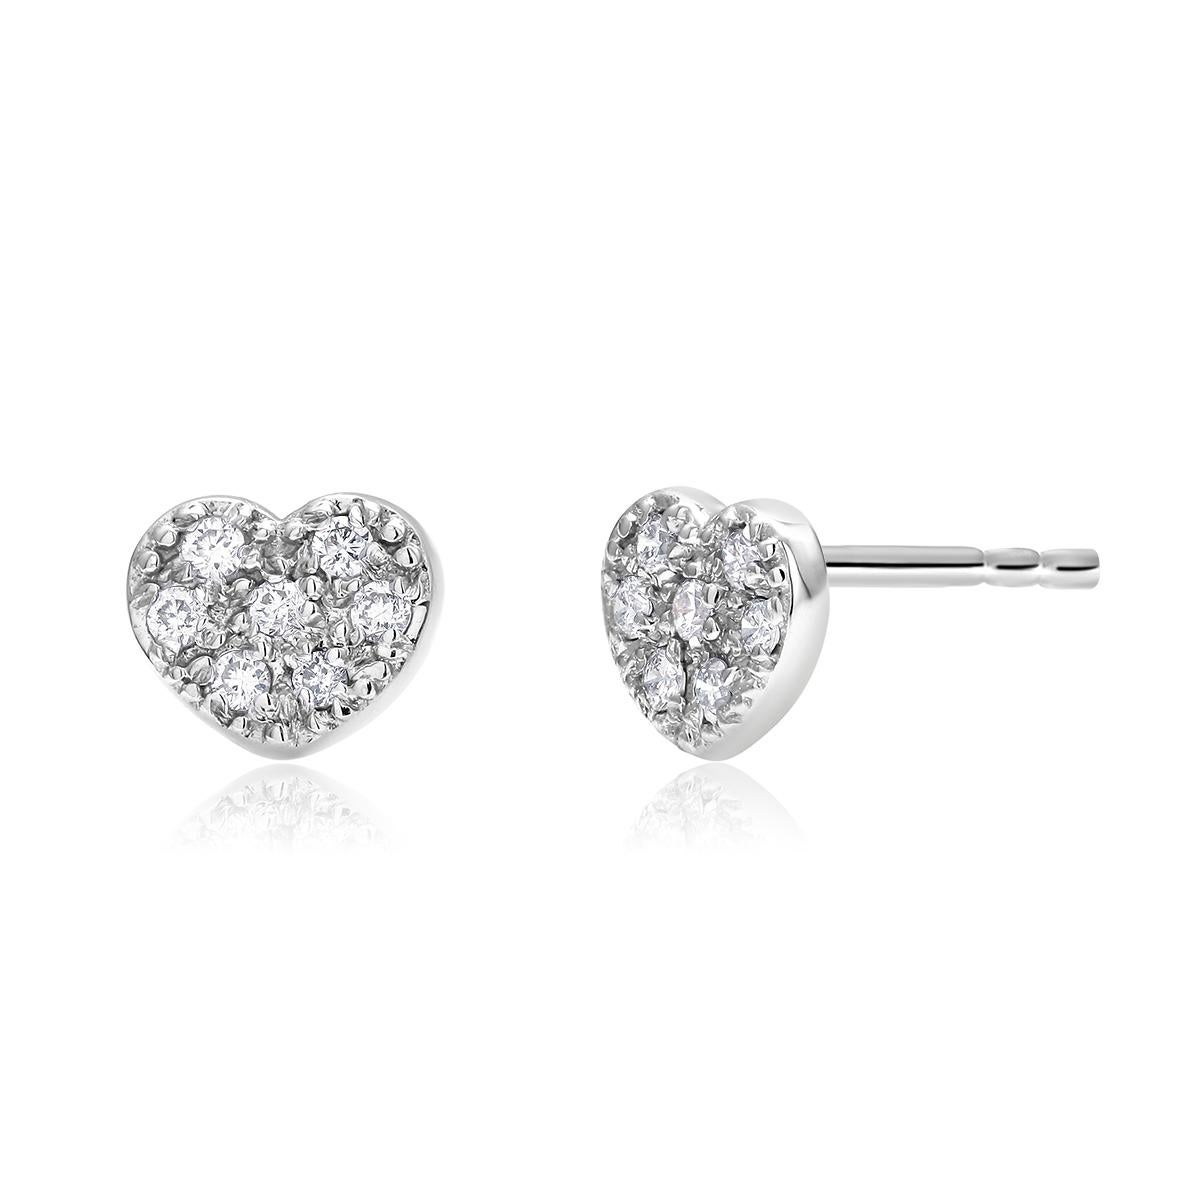 1 3 carat diamond stud earrings in 14k yellow gold